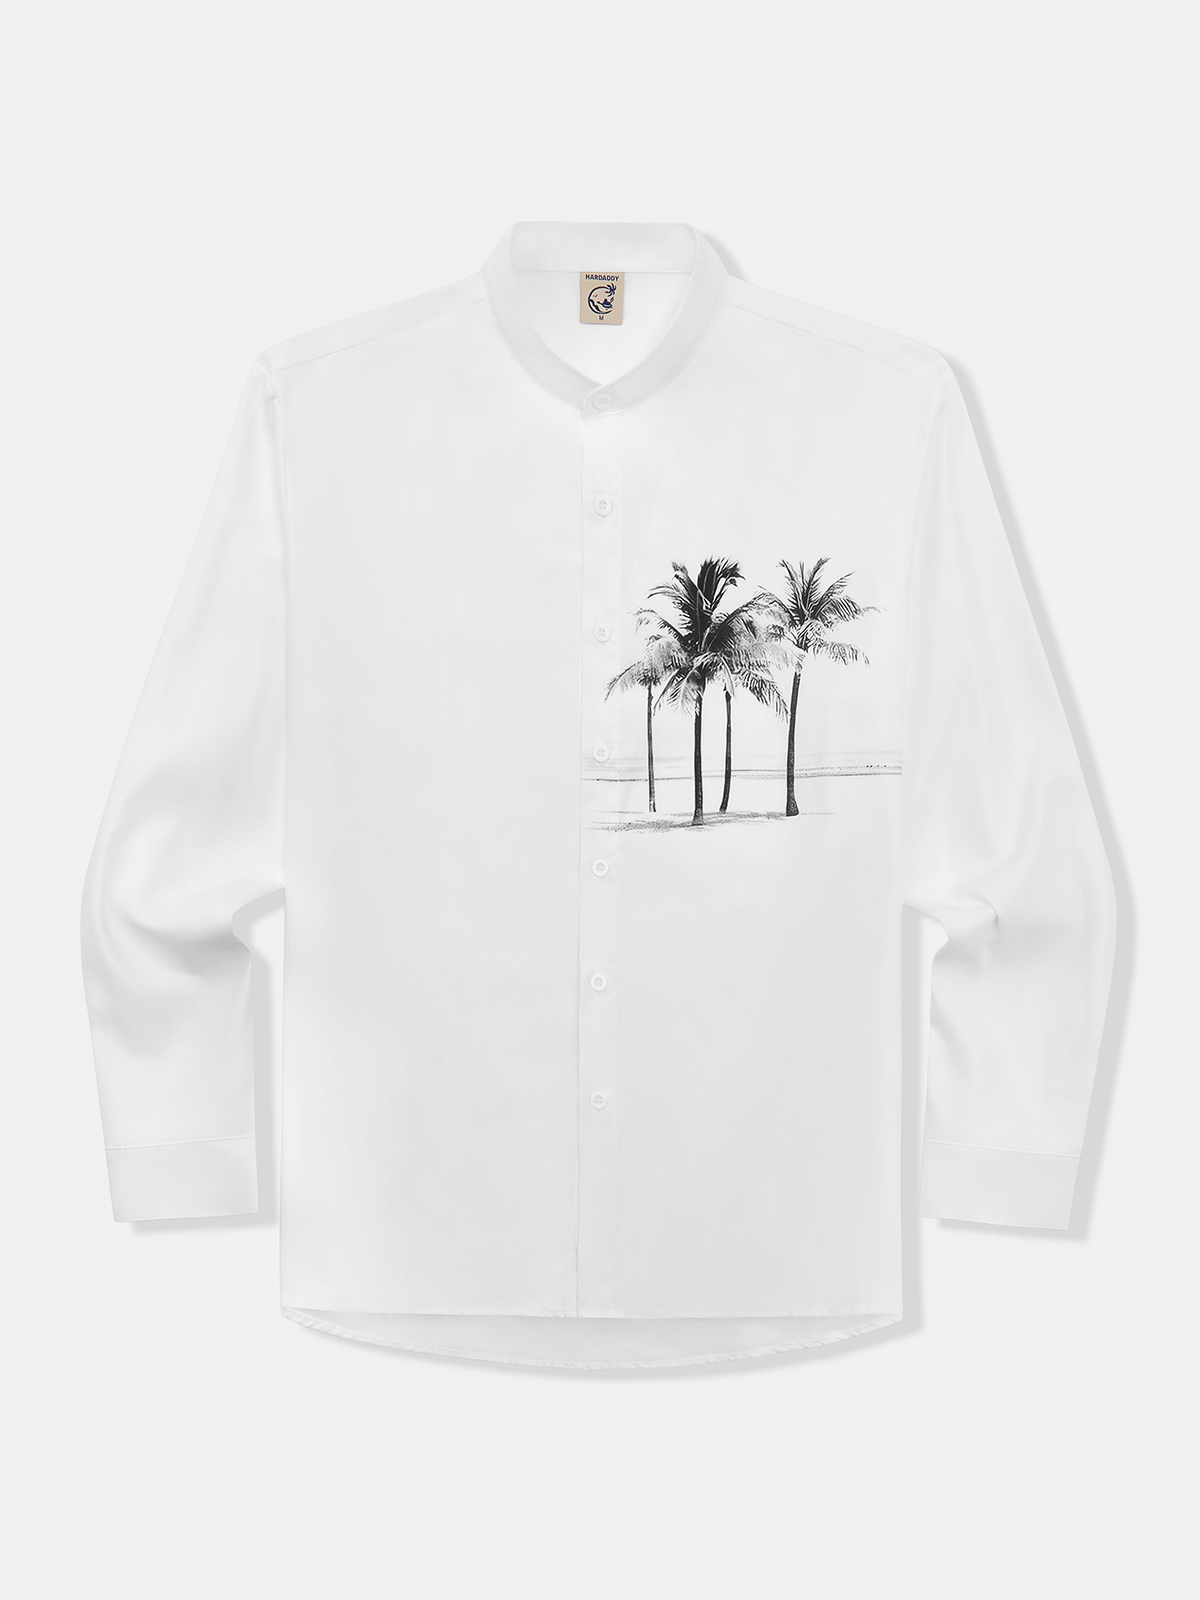 Hardaddy Coconut Tree Long Sleeve Resort Shirt